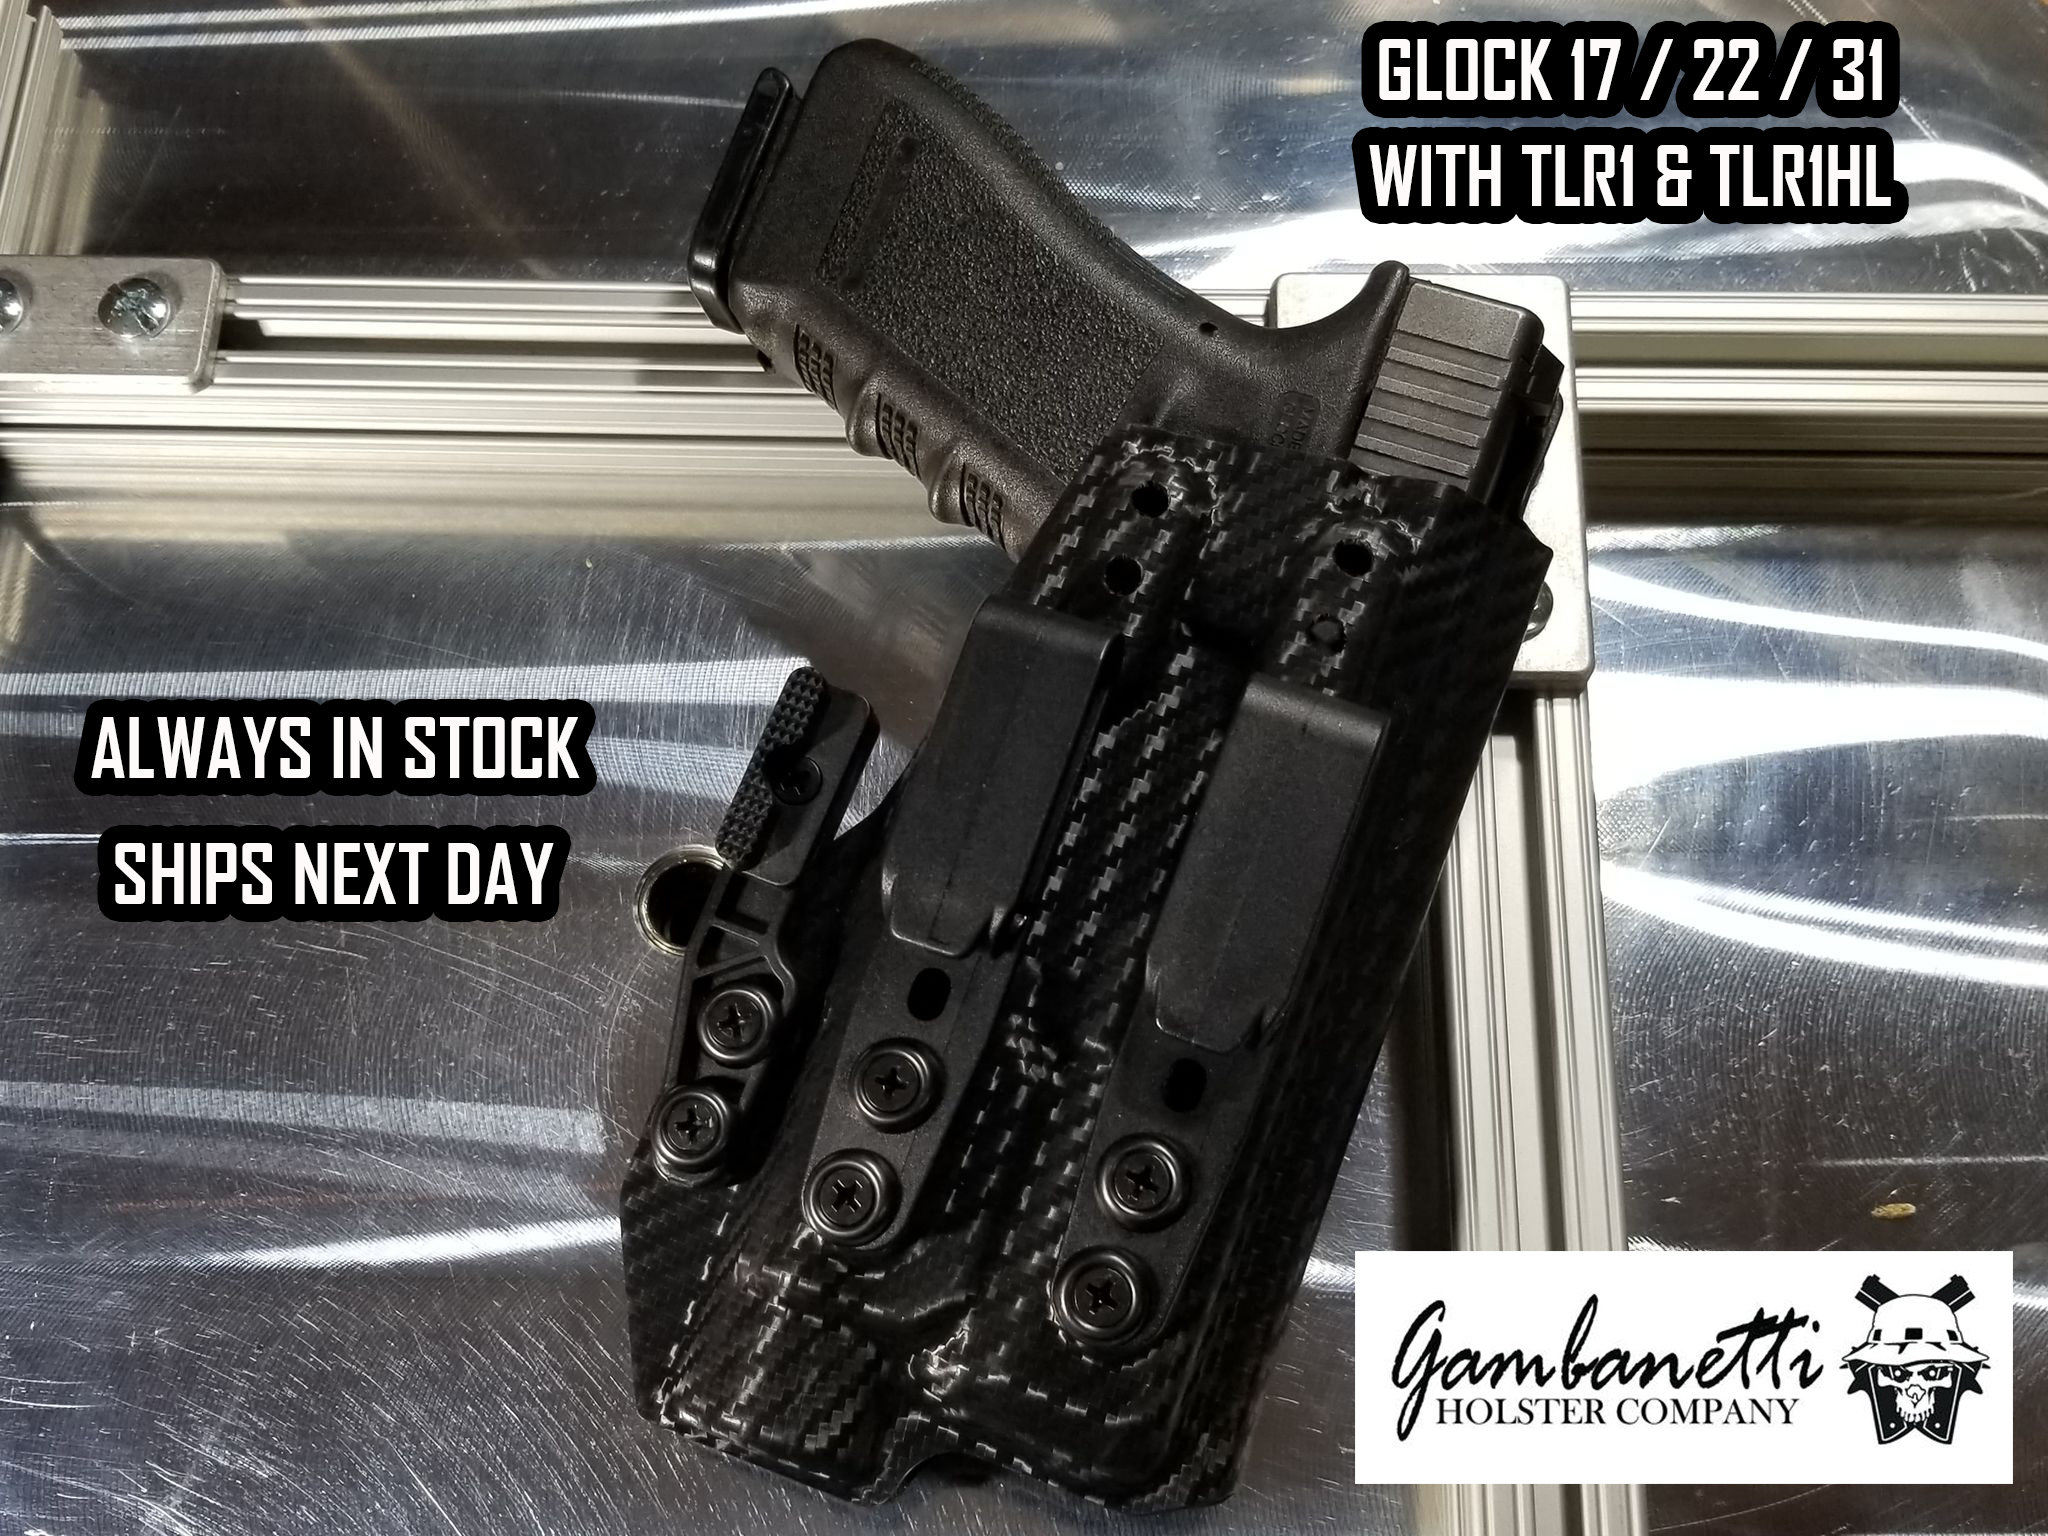 Glock 31 Leather Holster Pattern OWB - Mr. Lentz Leather Goods